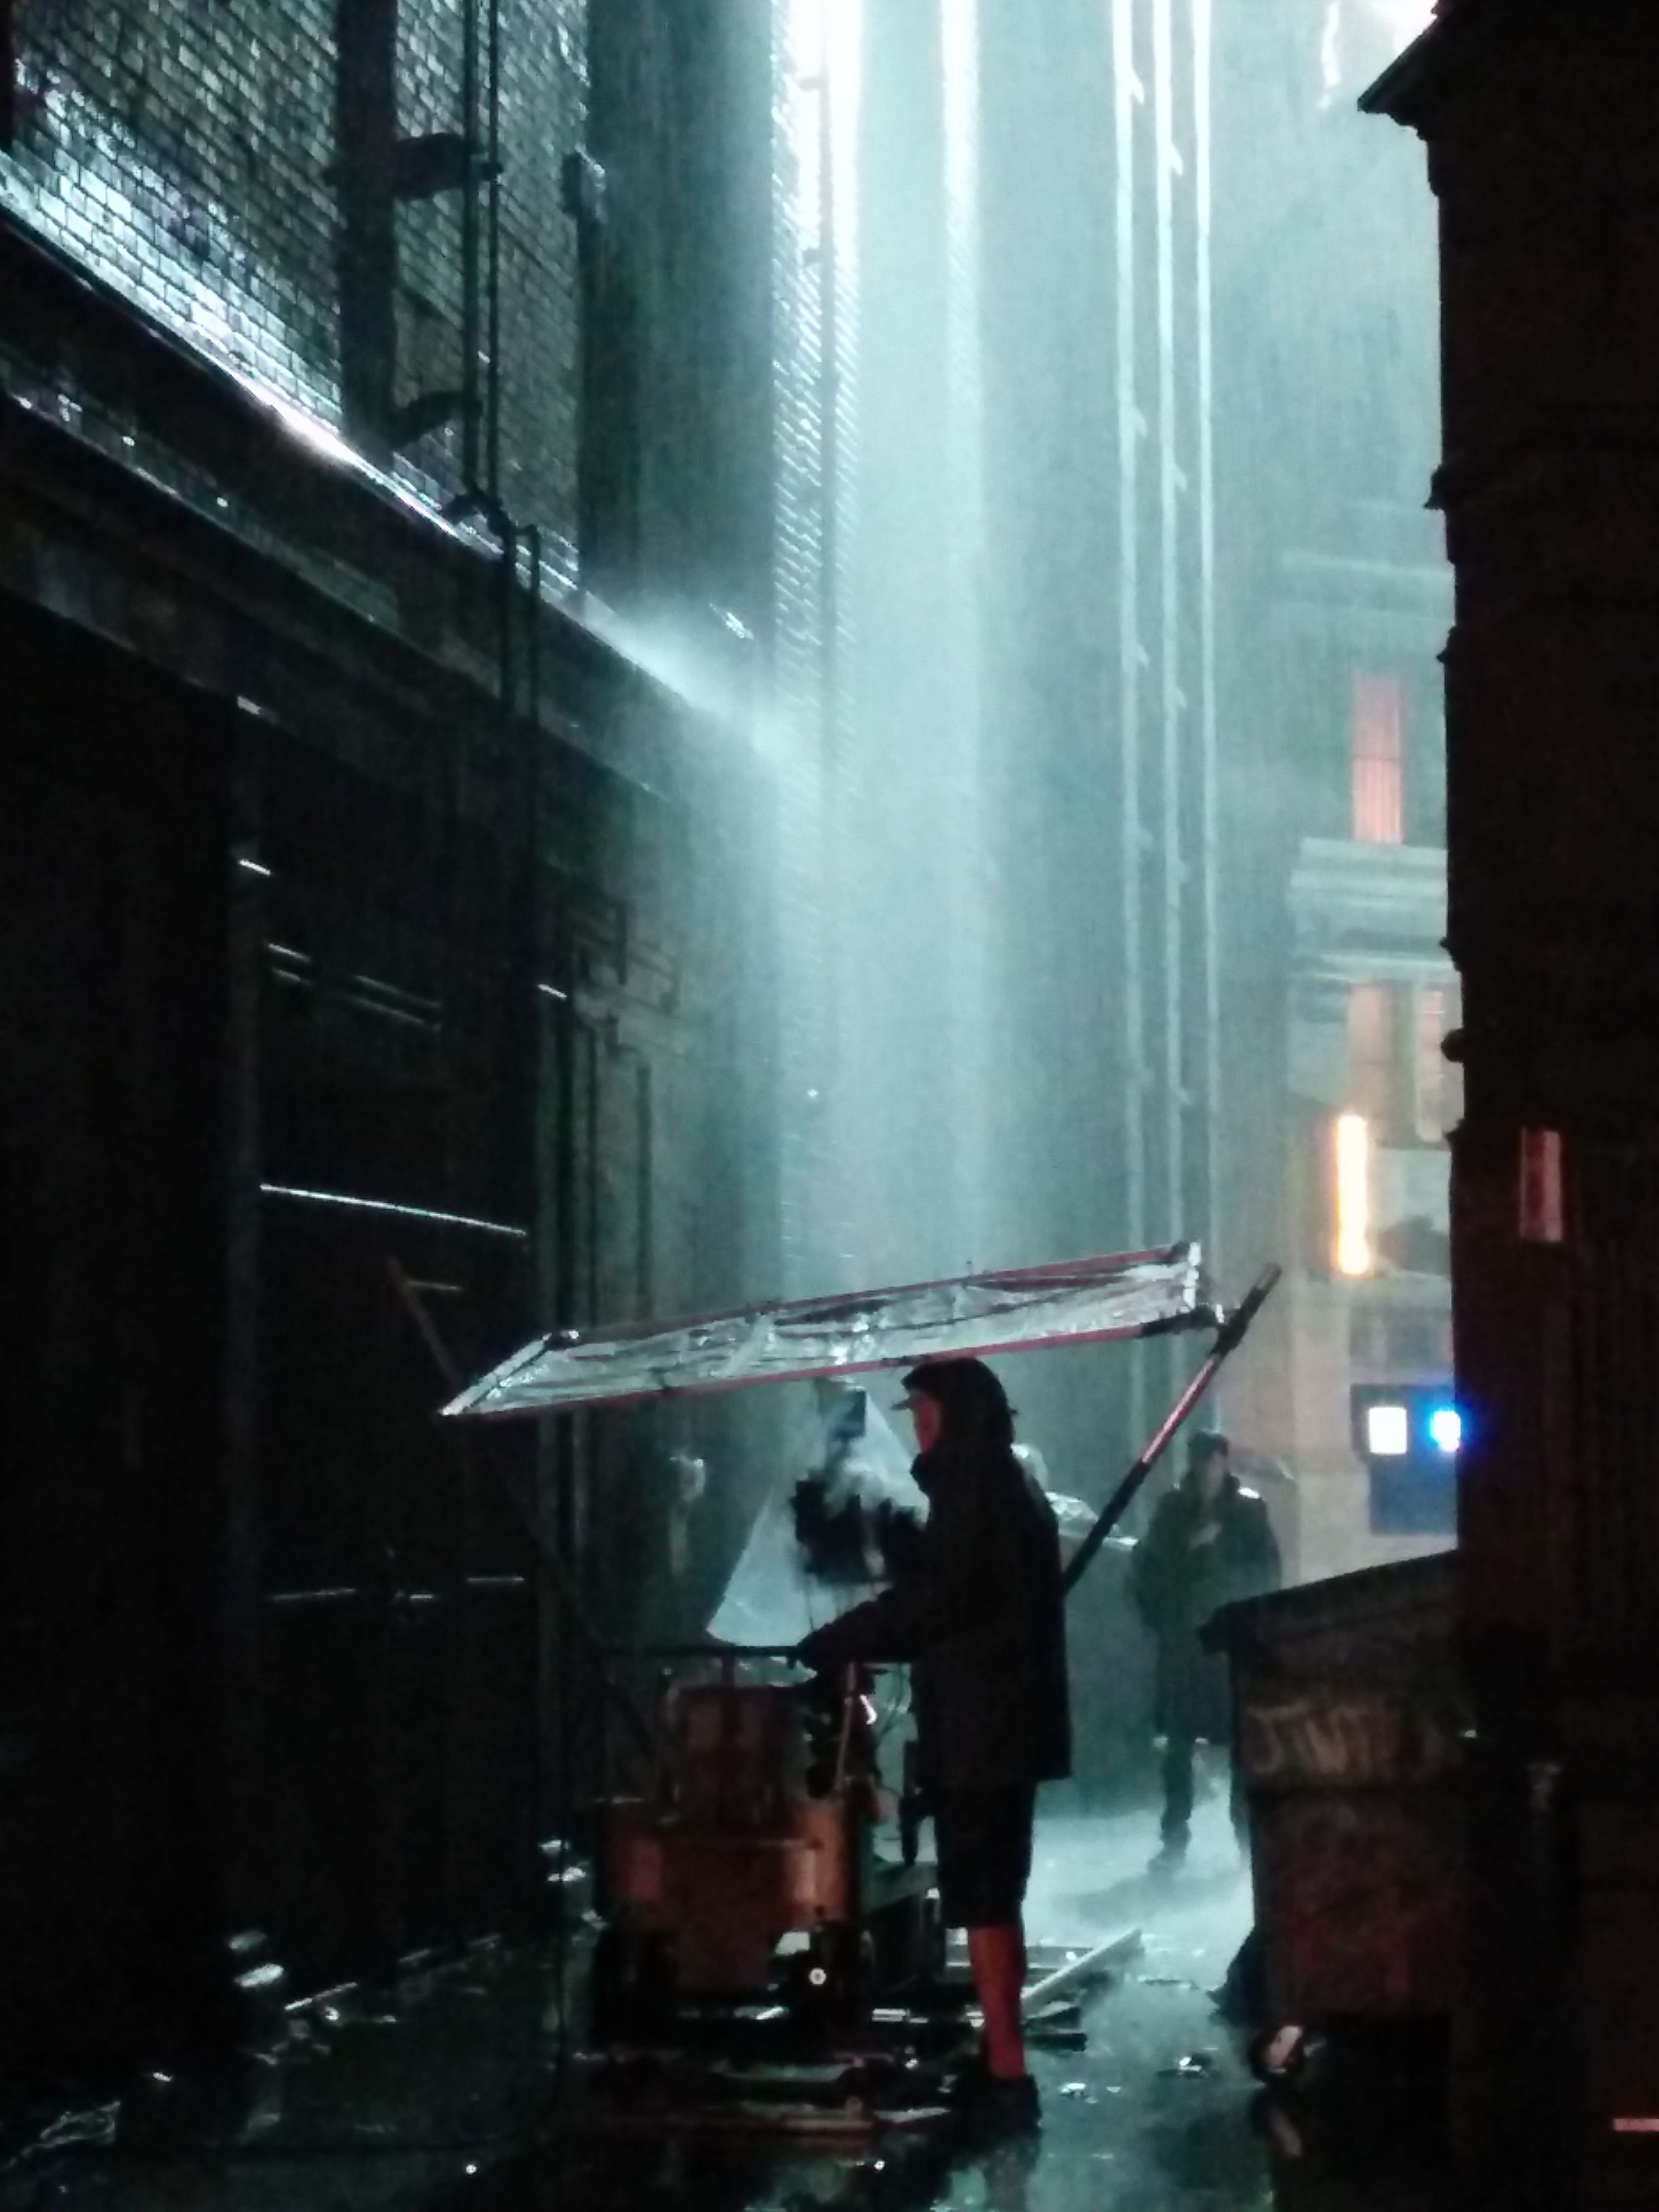 Batman Arkham Knight live action trailer. Michael under the rain tower.